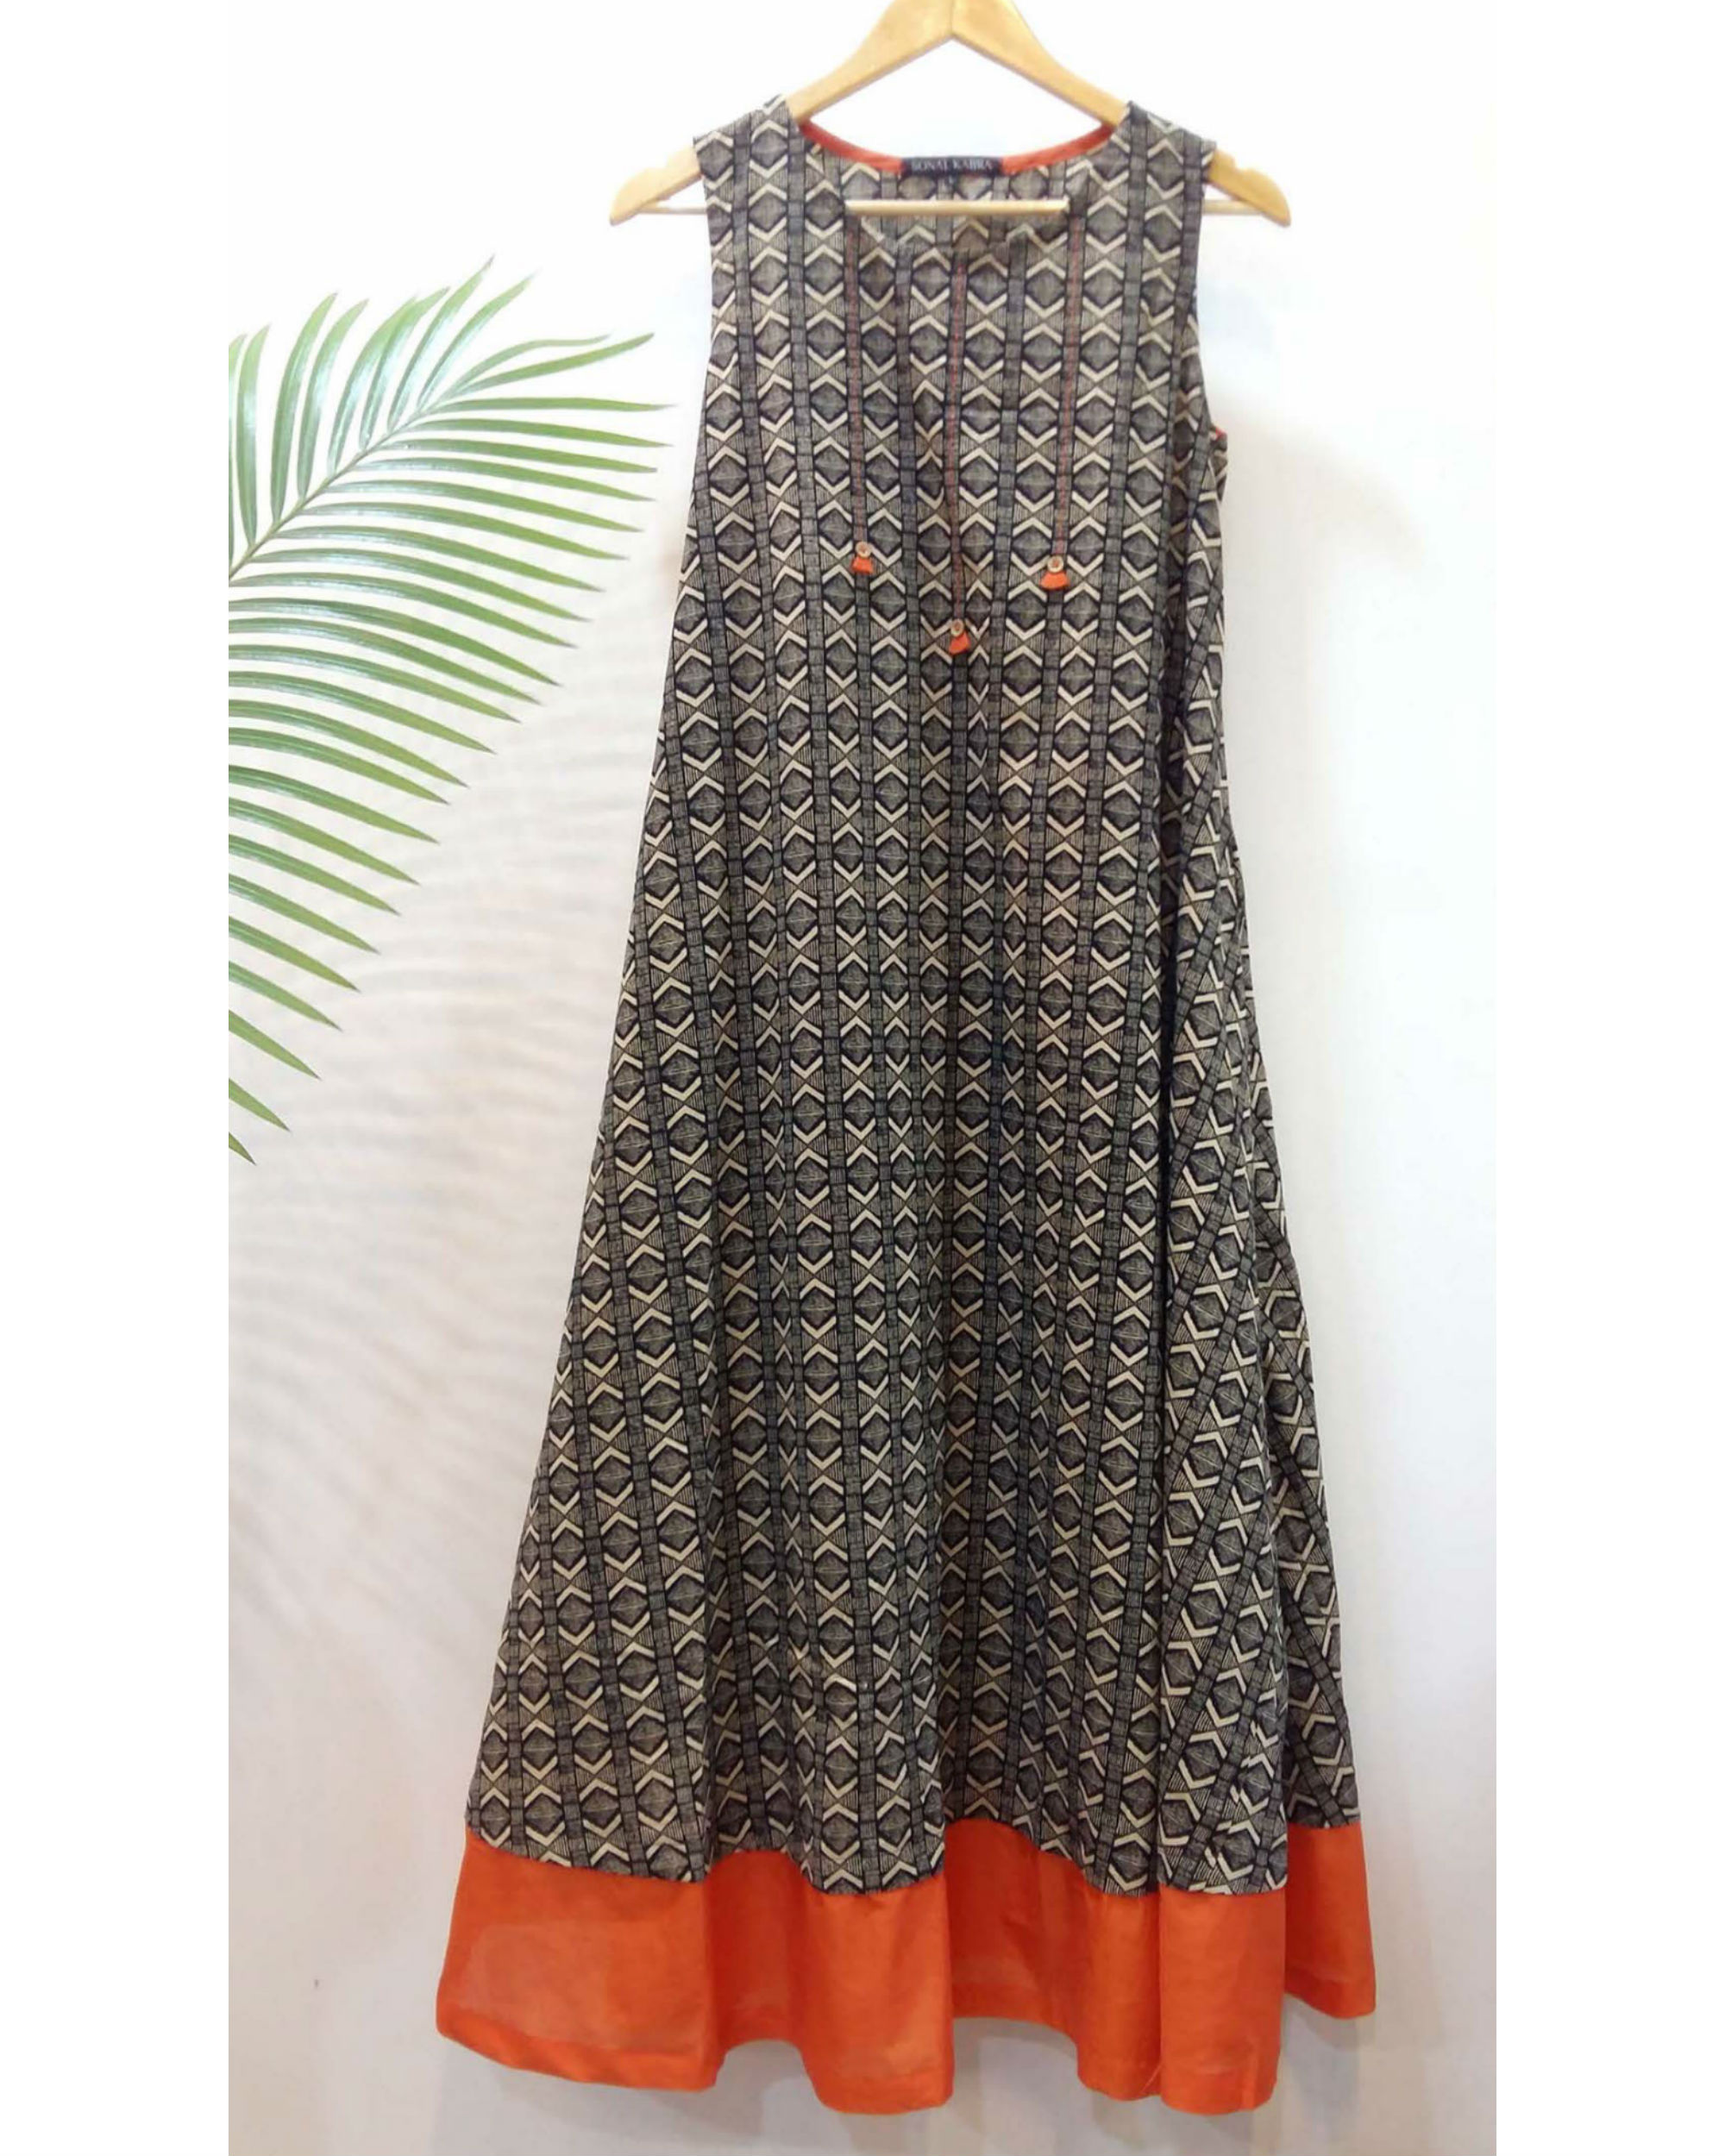 Grey dress with orange border by Sonal Kabra | The Secret Label